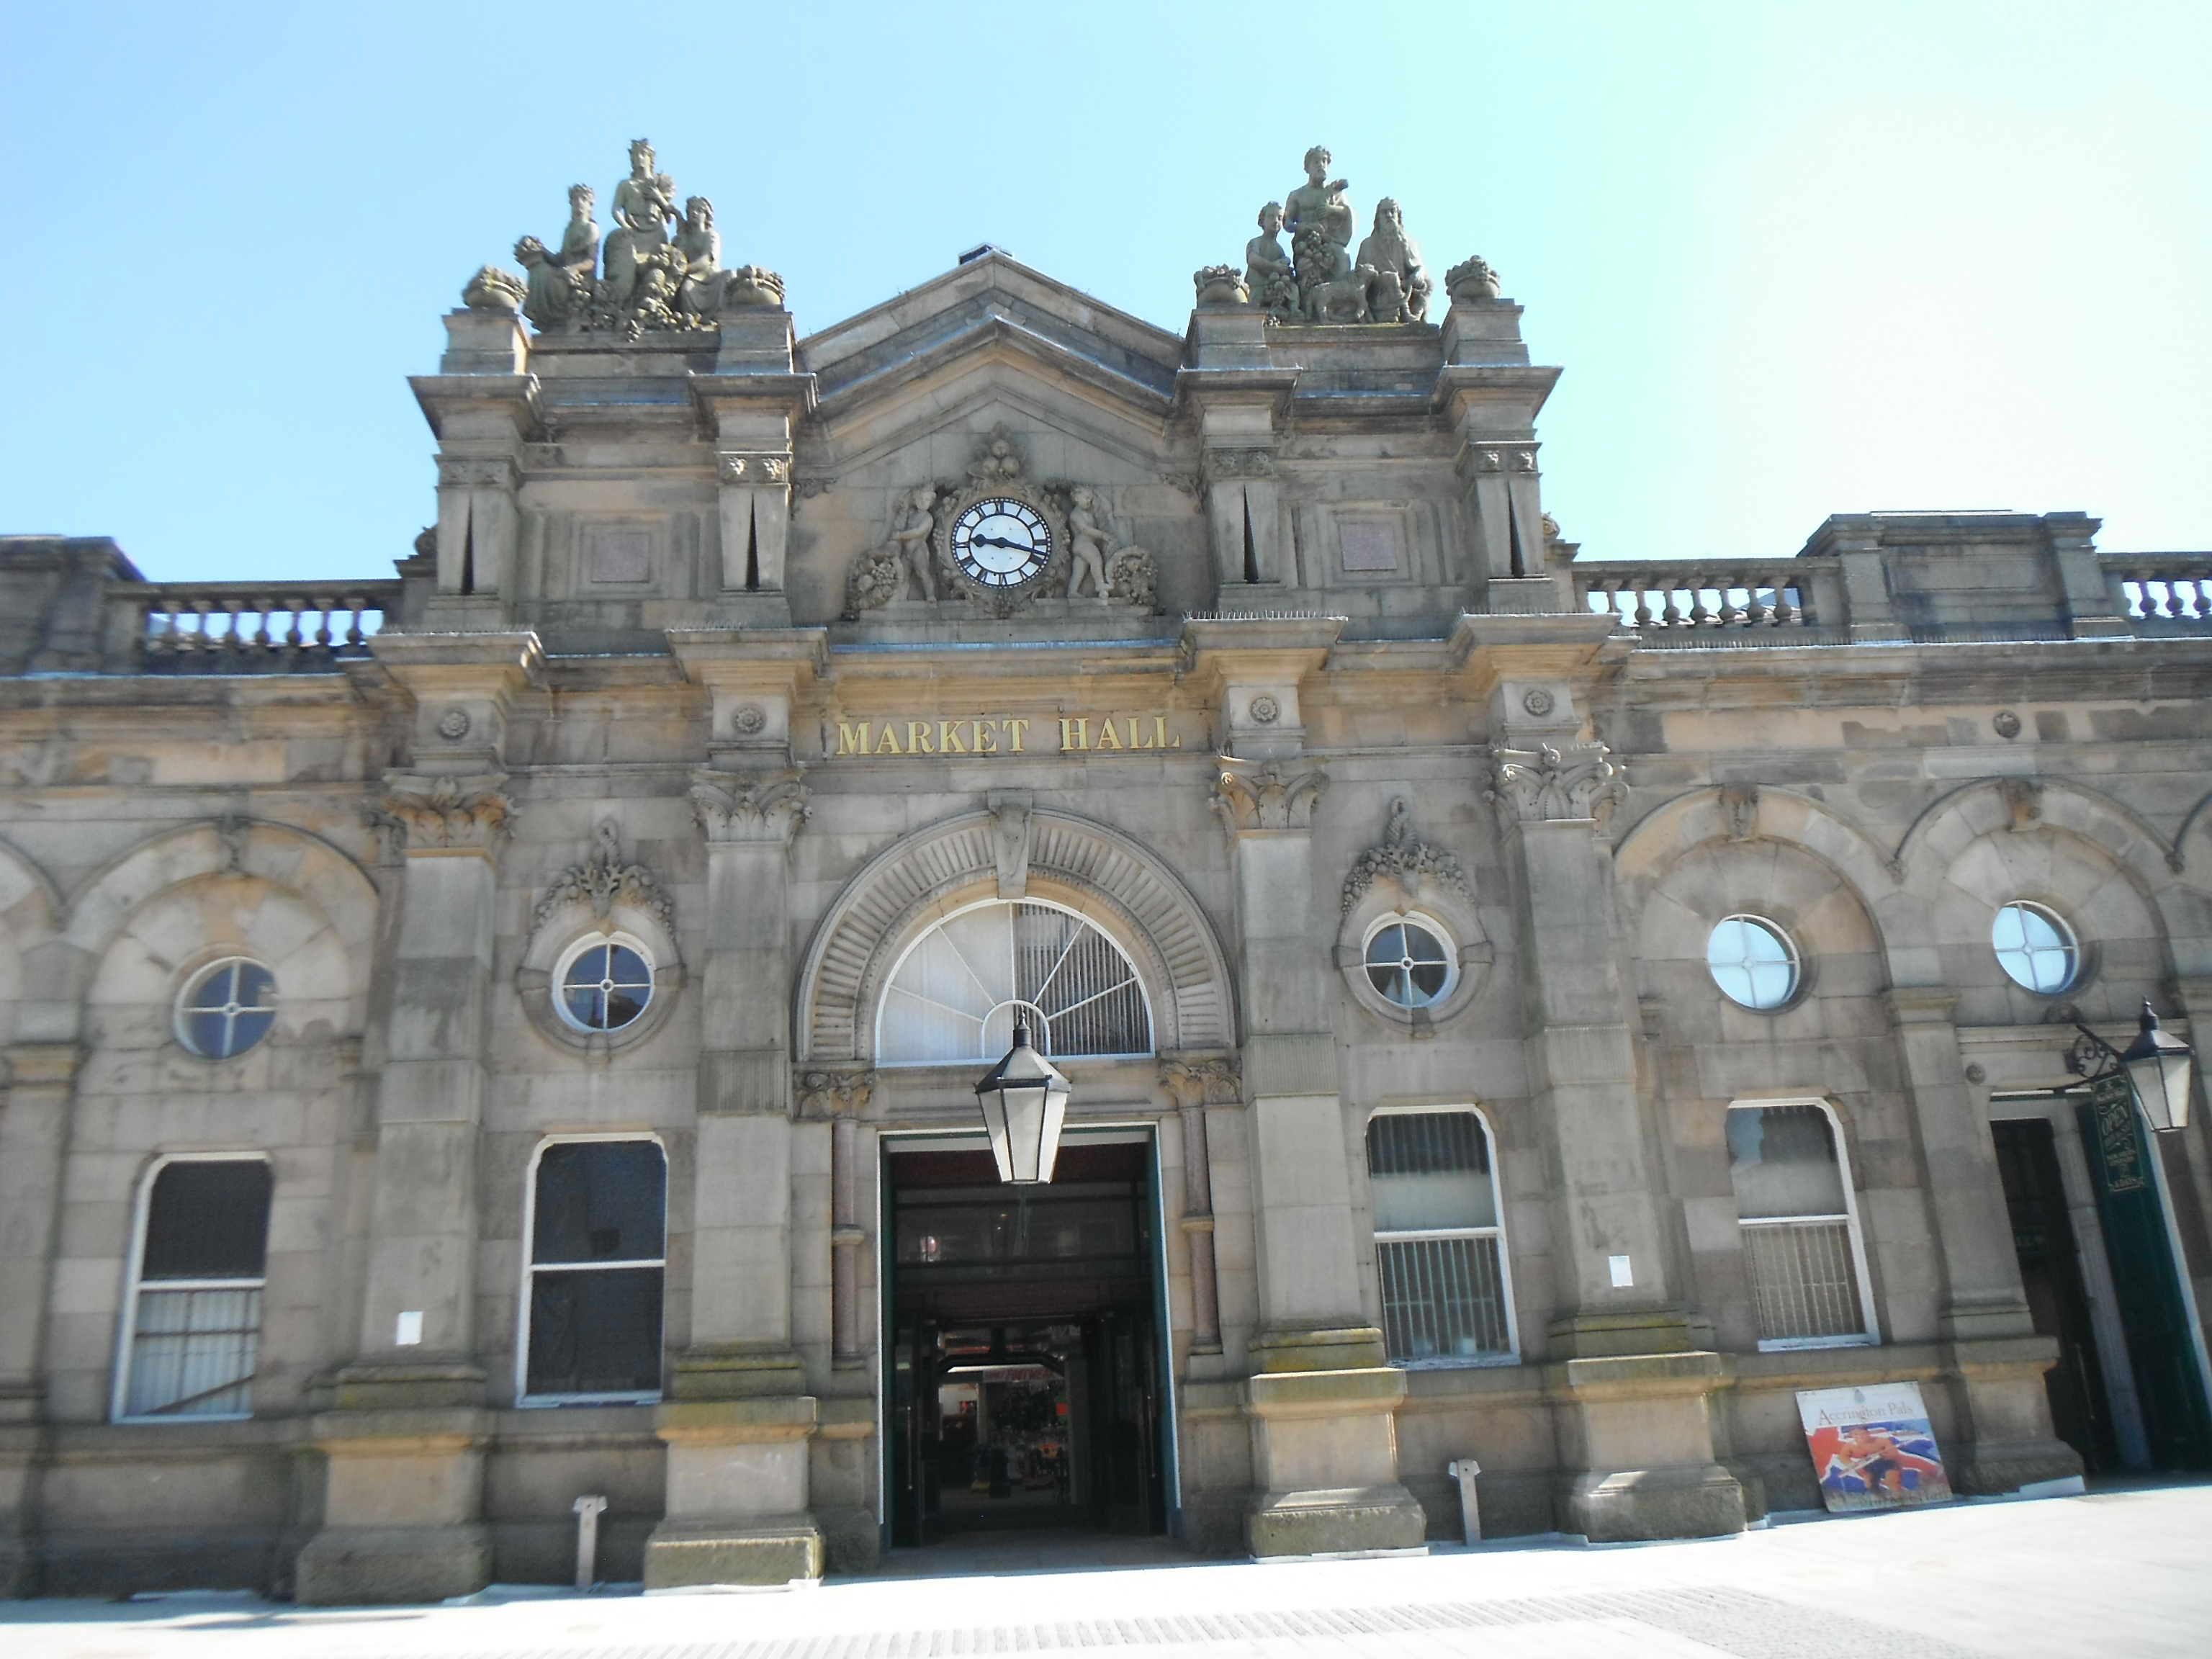 Photo taken by me - Accrington Town Hall, Lancashire 